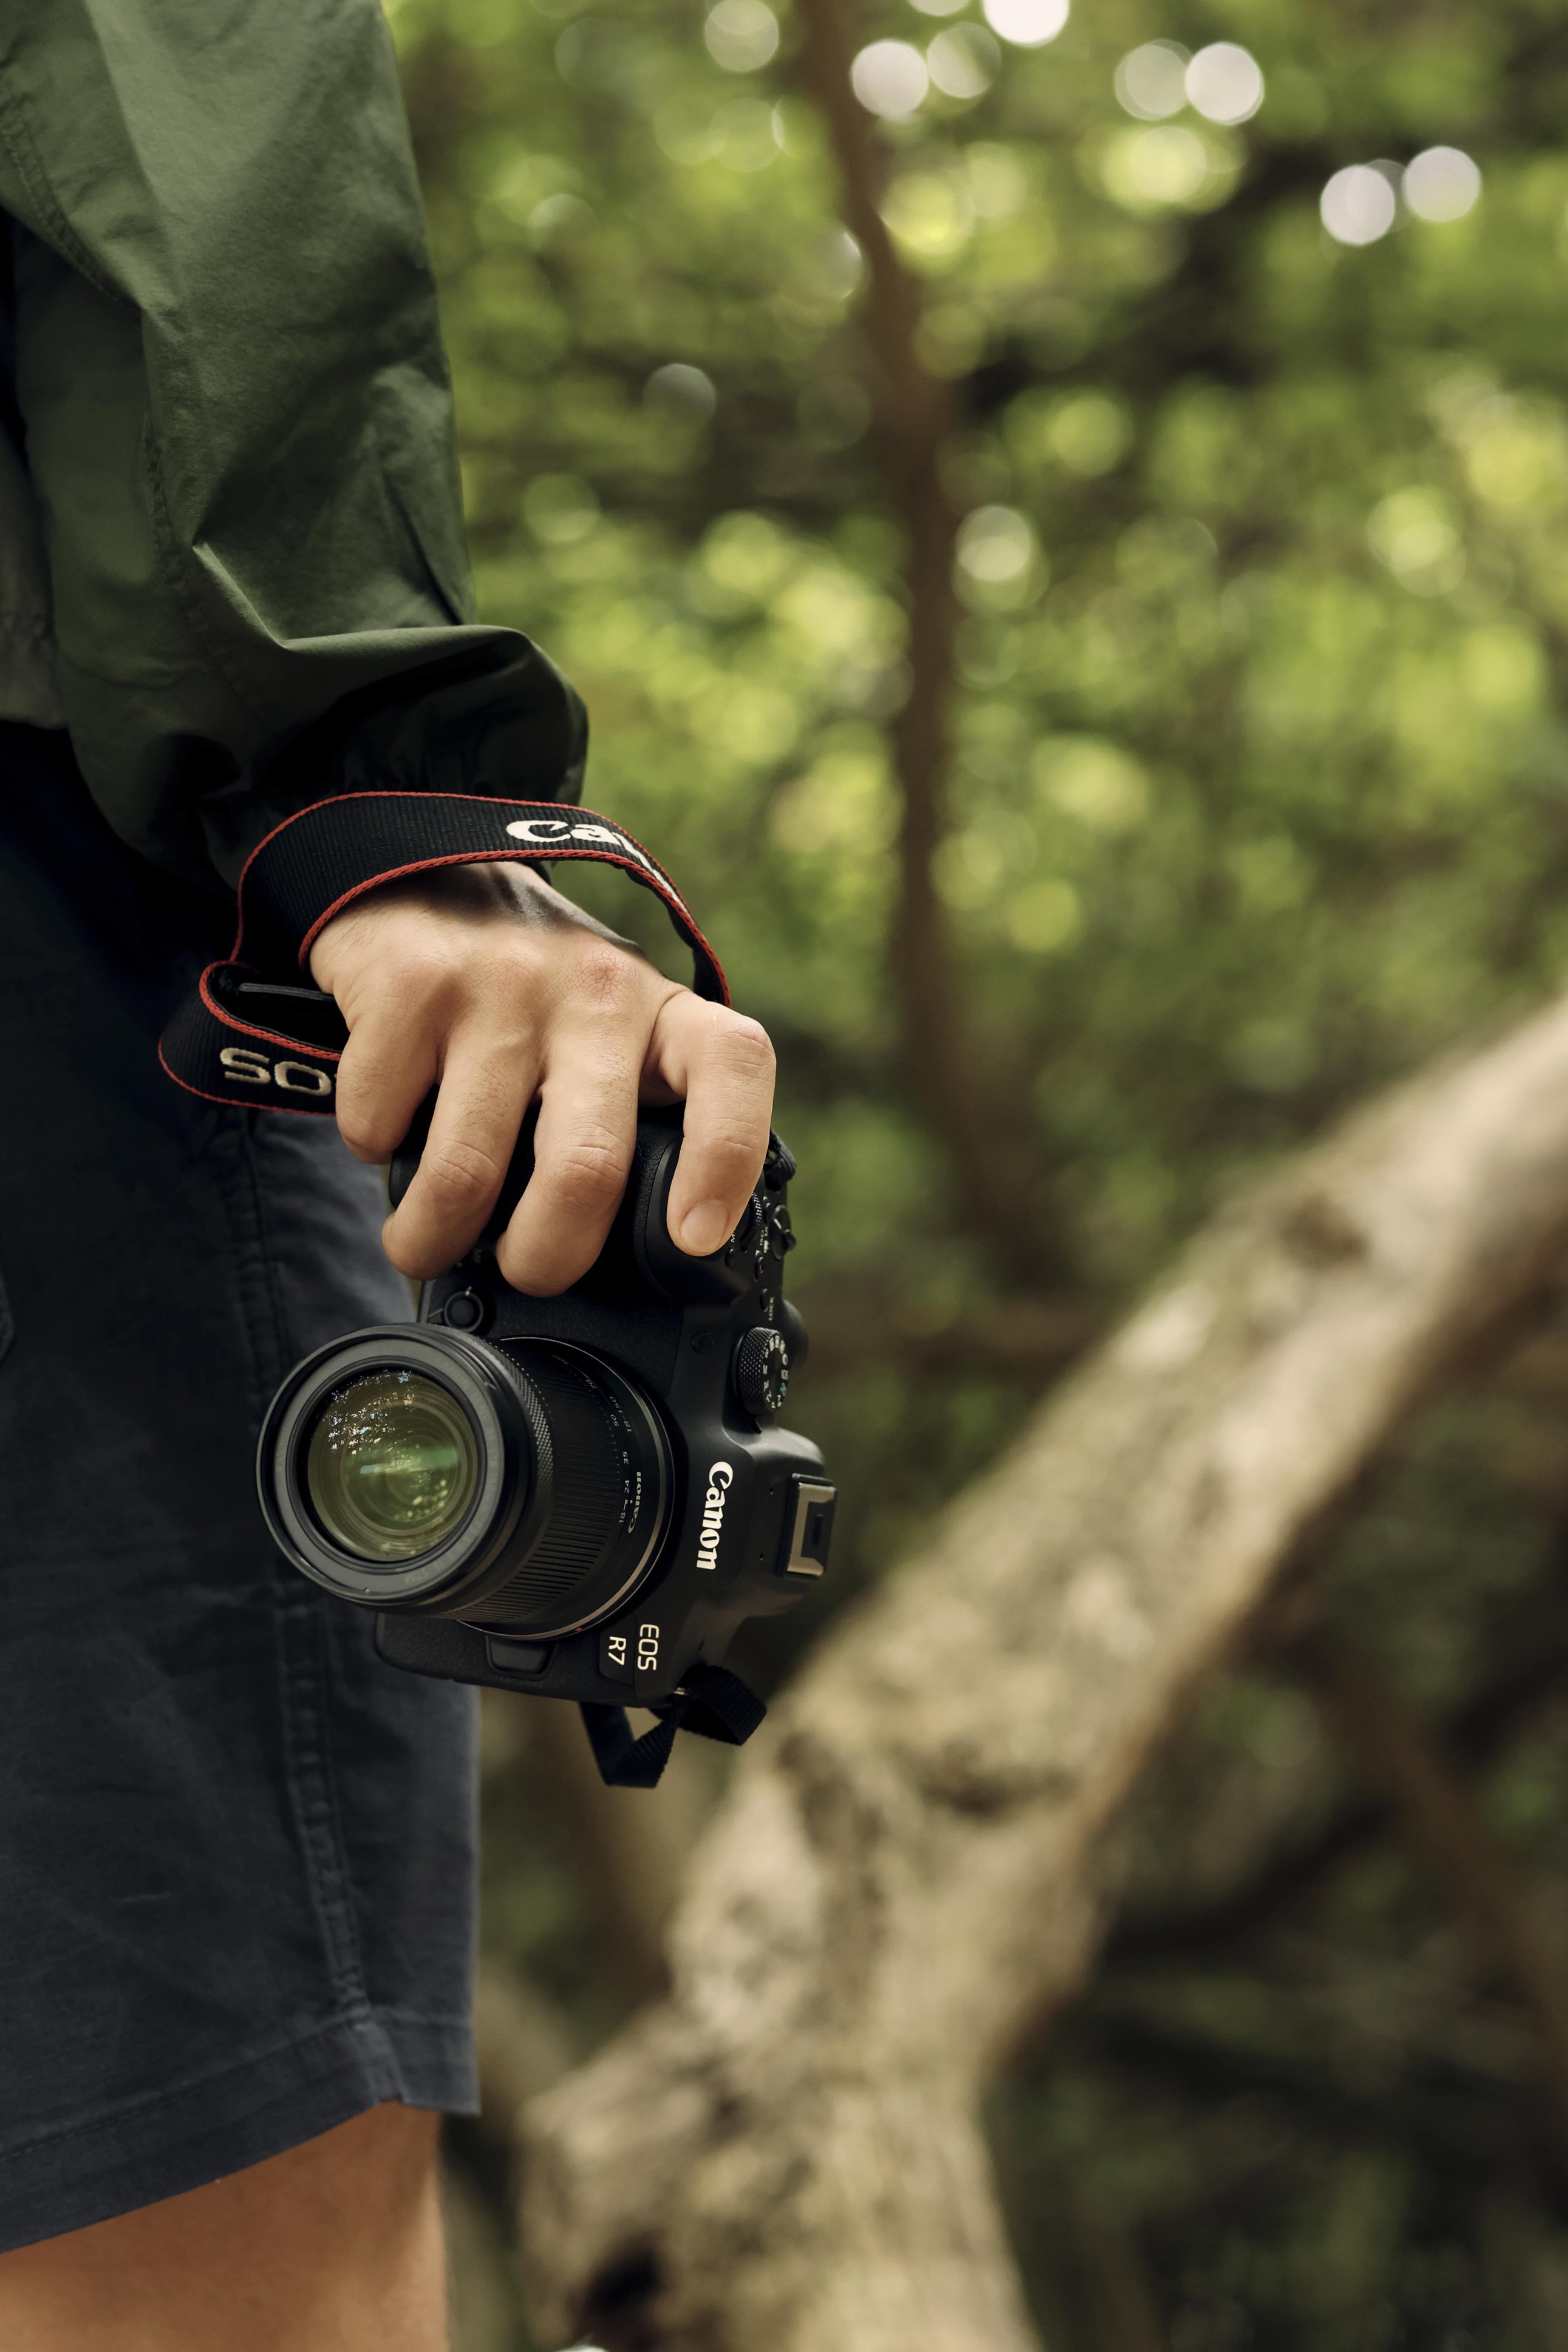 Canon EOS R7 Mirrorless Camera 